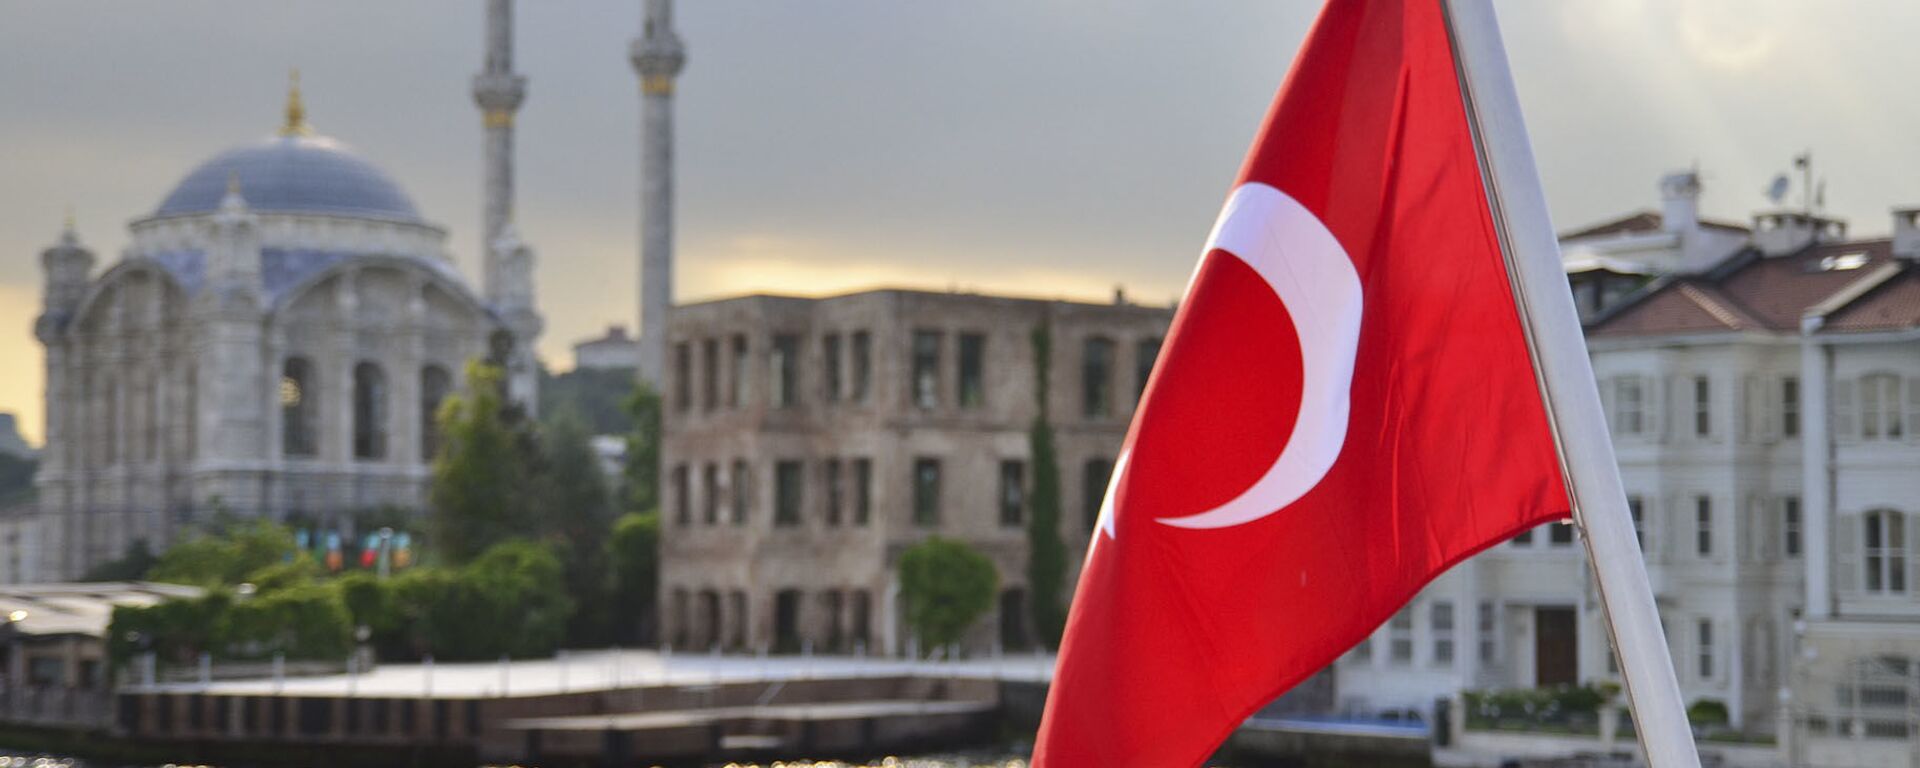 Турецкий флаг на фоне стамбульского пейзажа - Sputnik Аҧсны, 1920, 22.06.2021